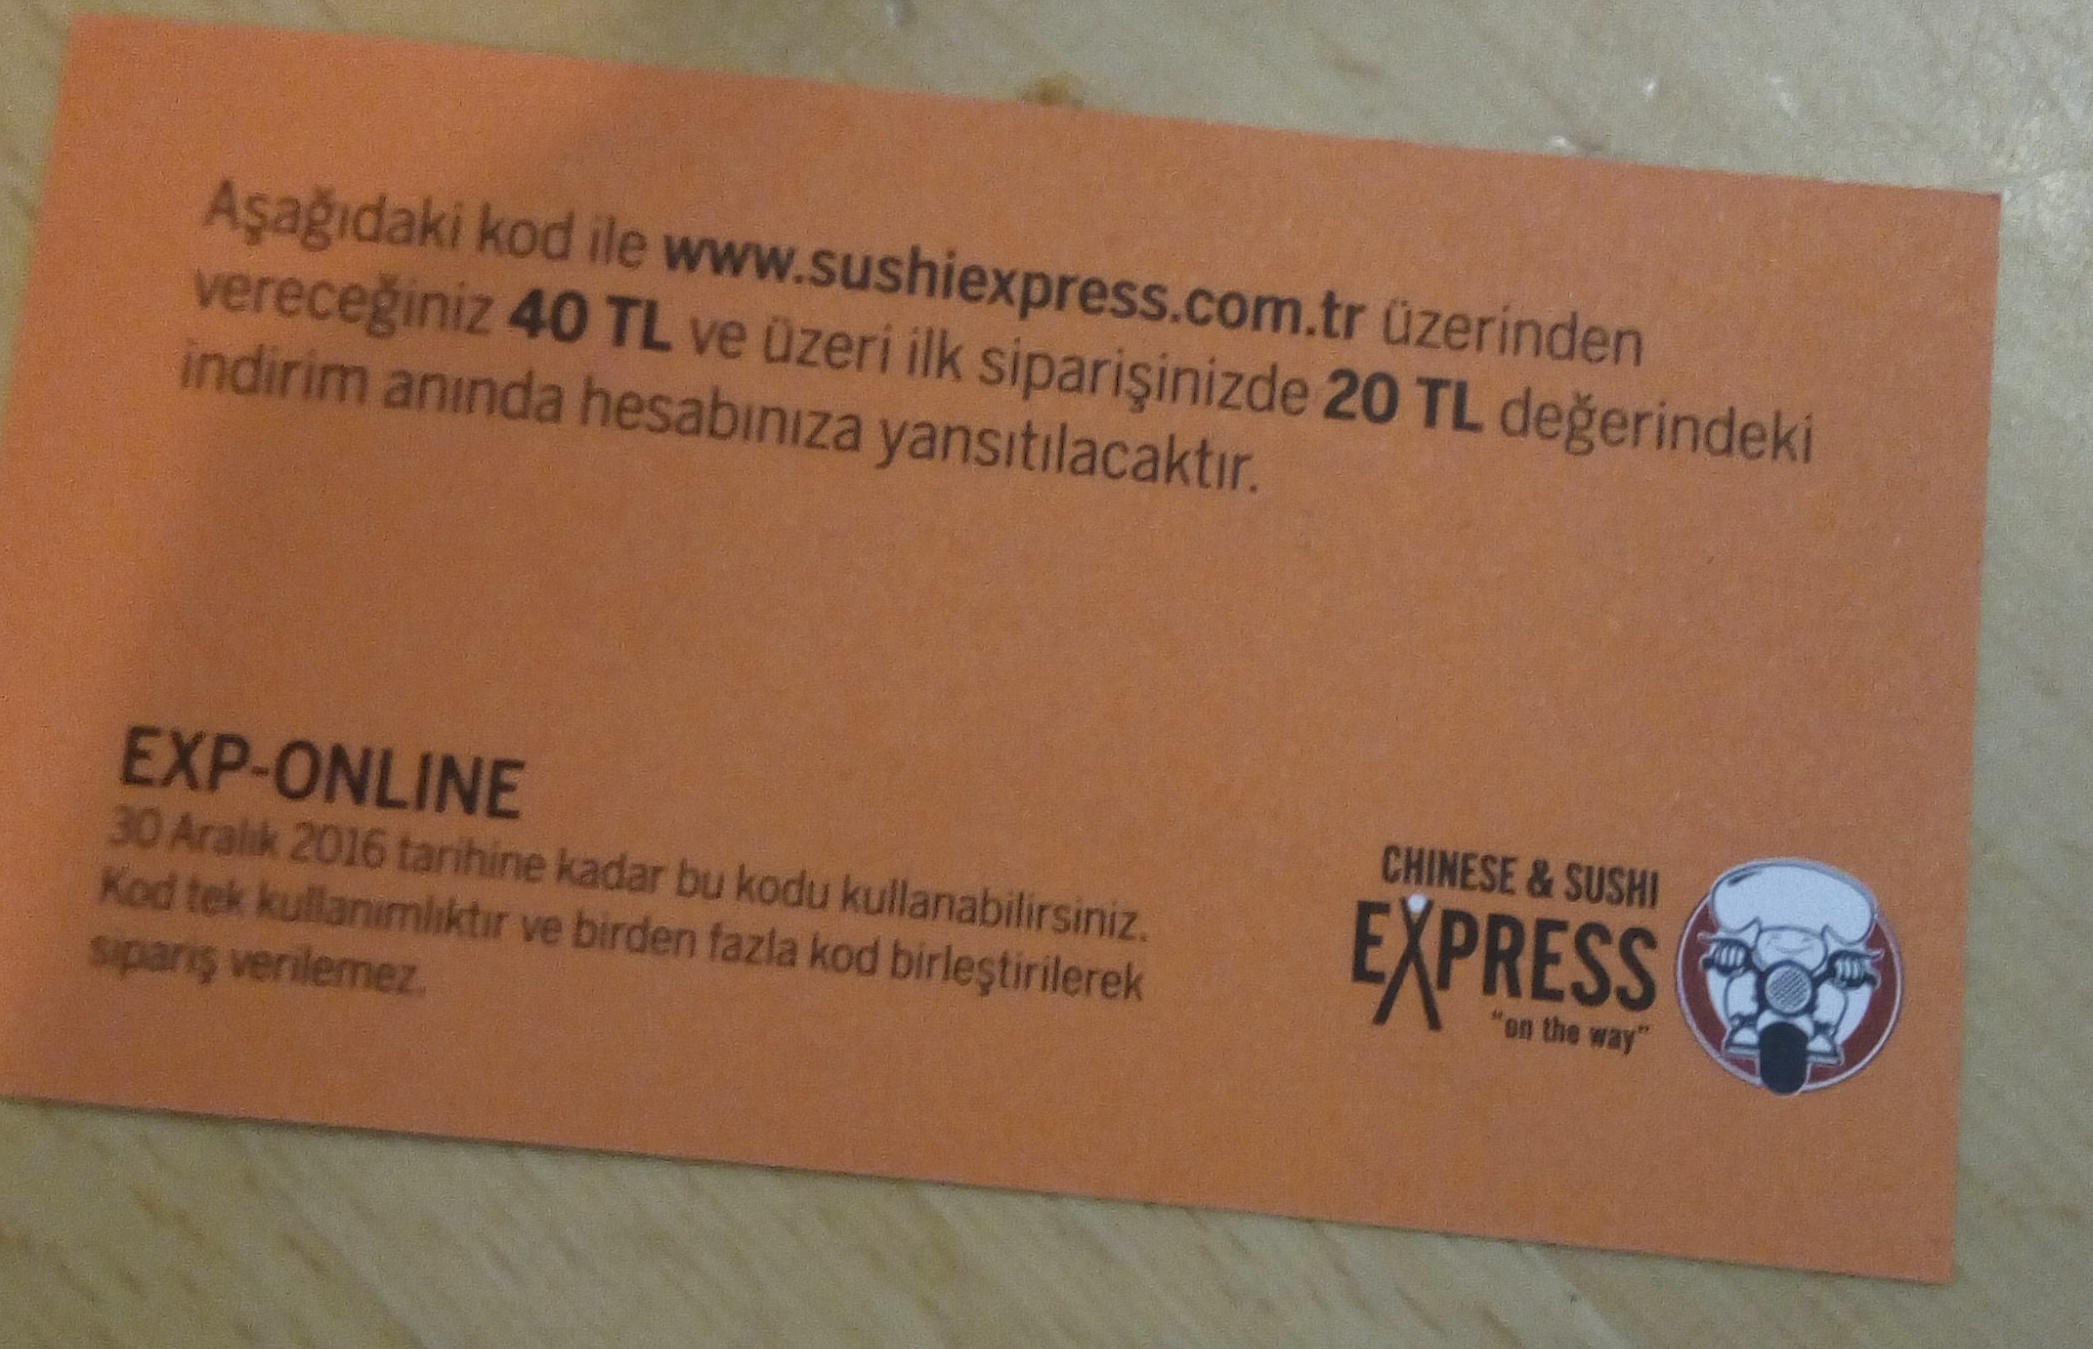 Chinese&amp;Sushi Express 40 TL üzeri 20 TL indirim » Sayfa 1 1